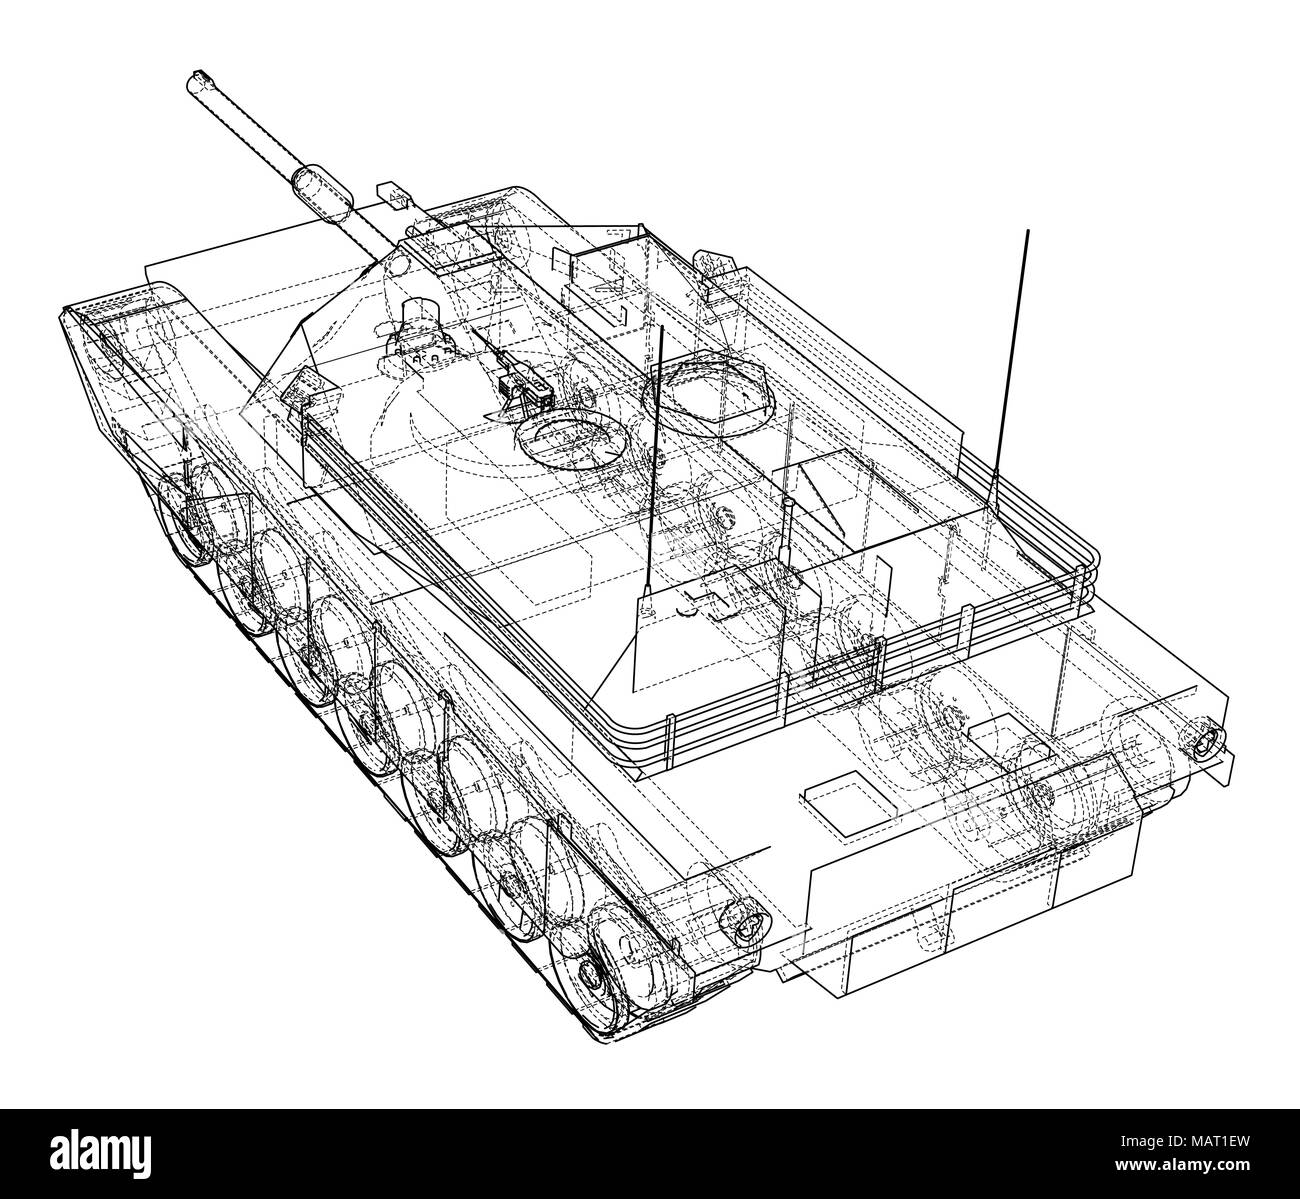 Blueprint of realistic tank Stock Photo - Alamy